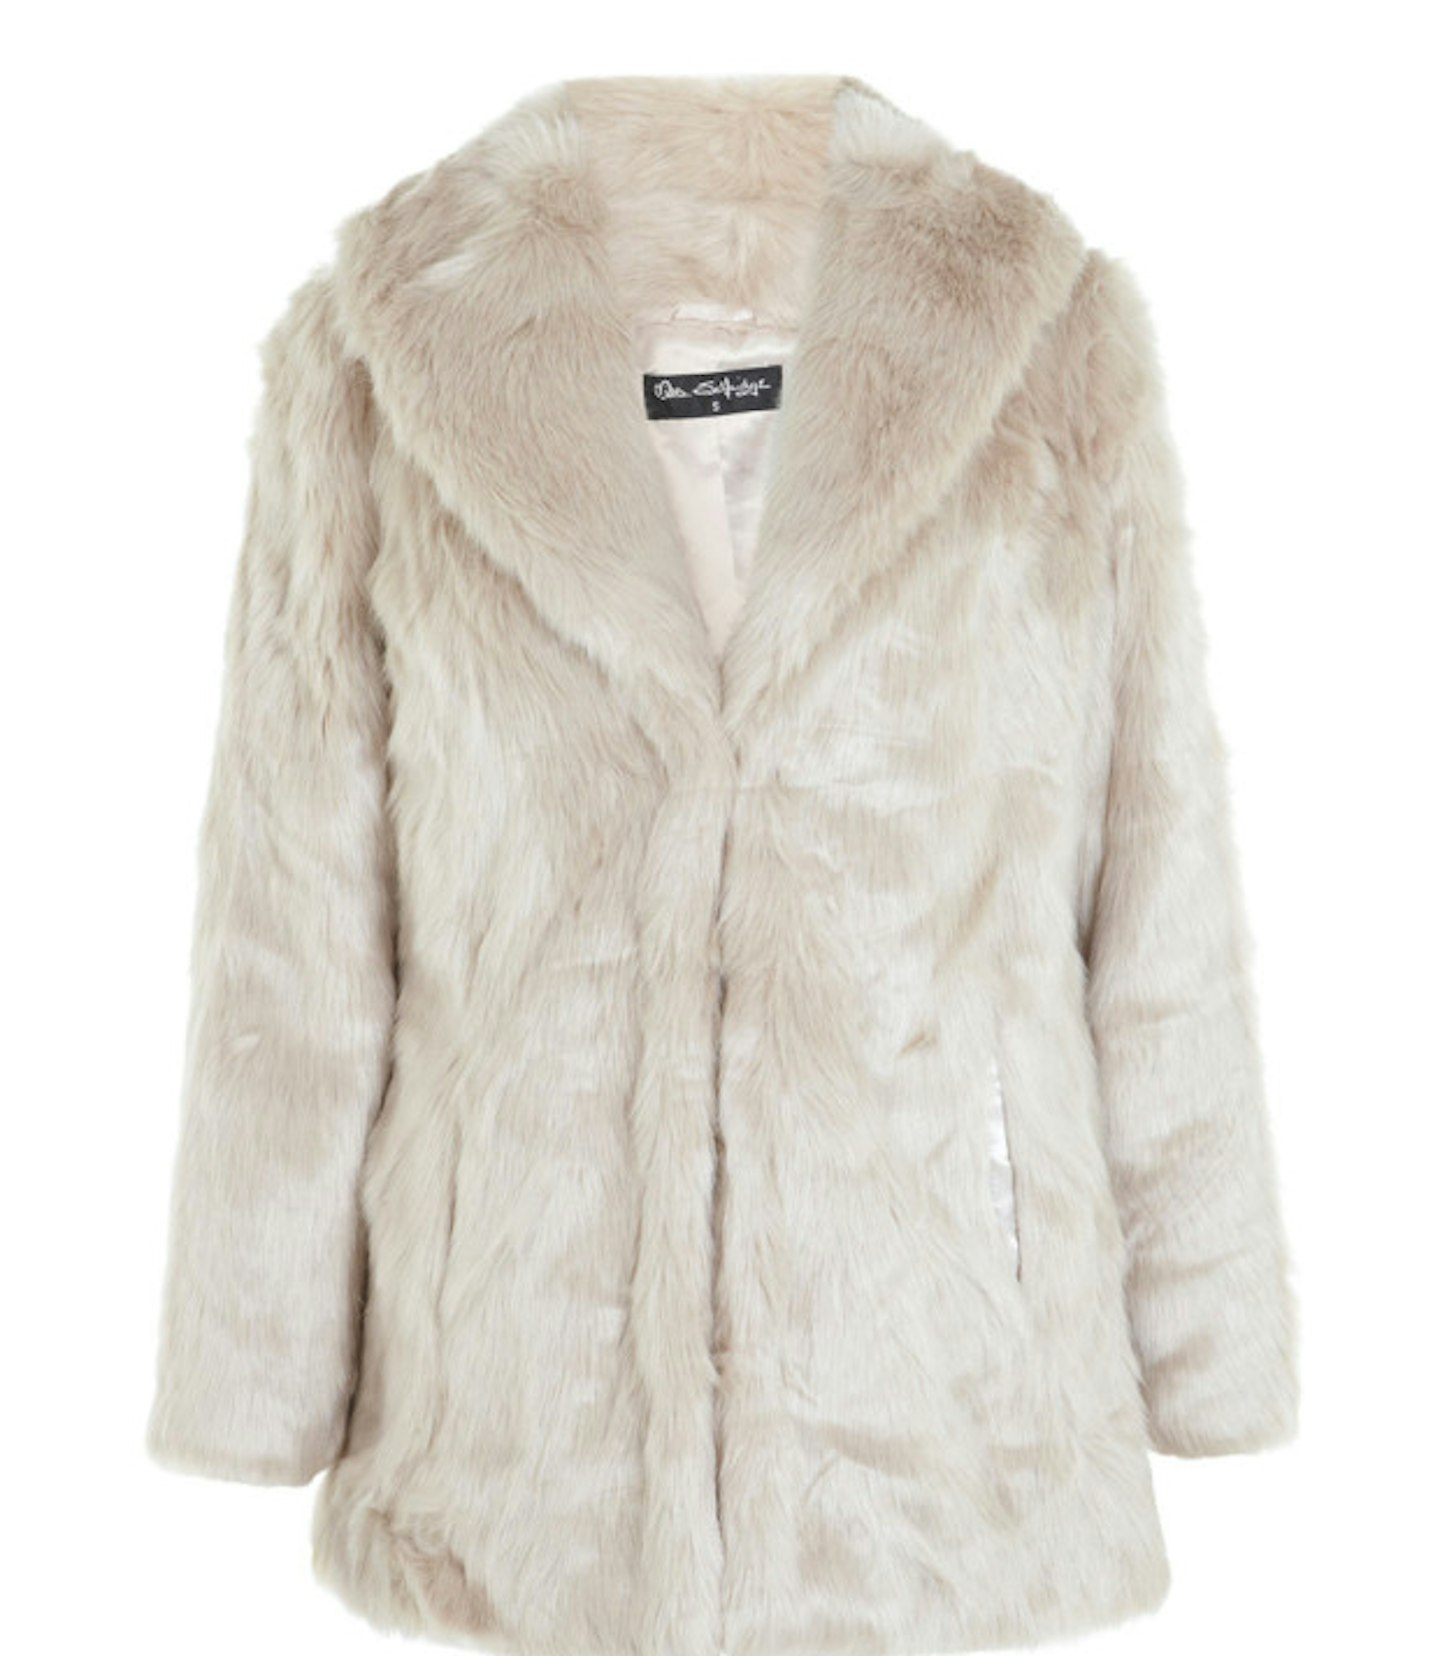 Cream faux fur jacket